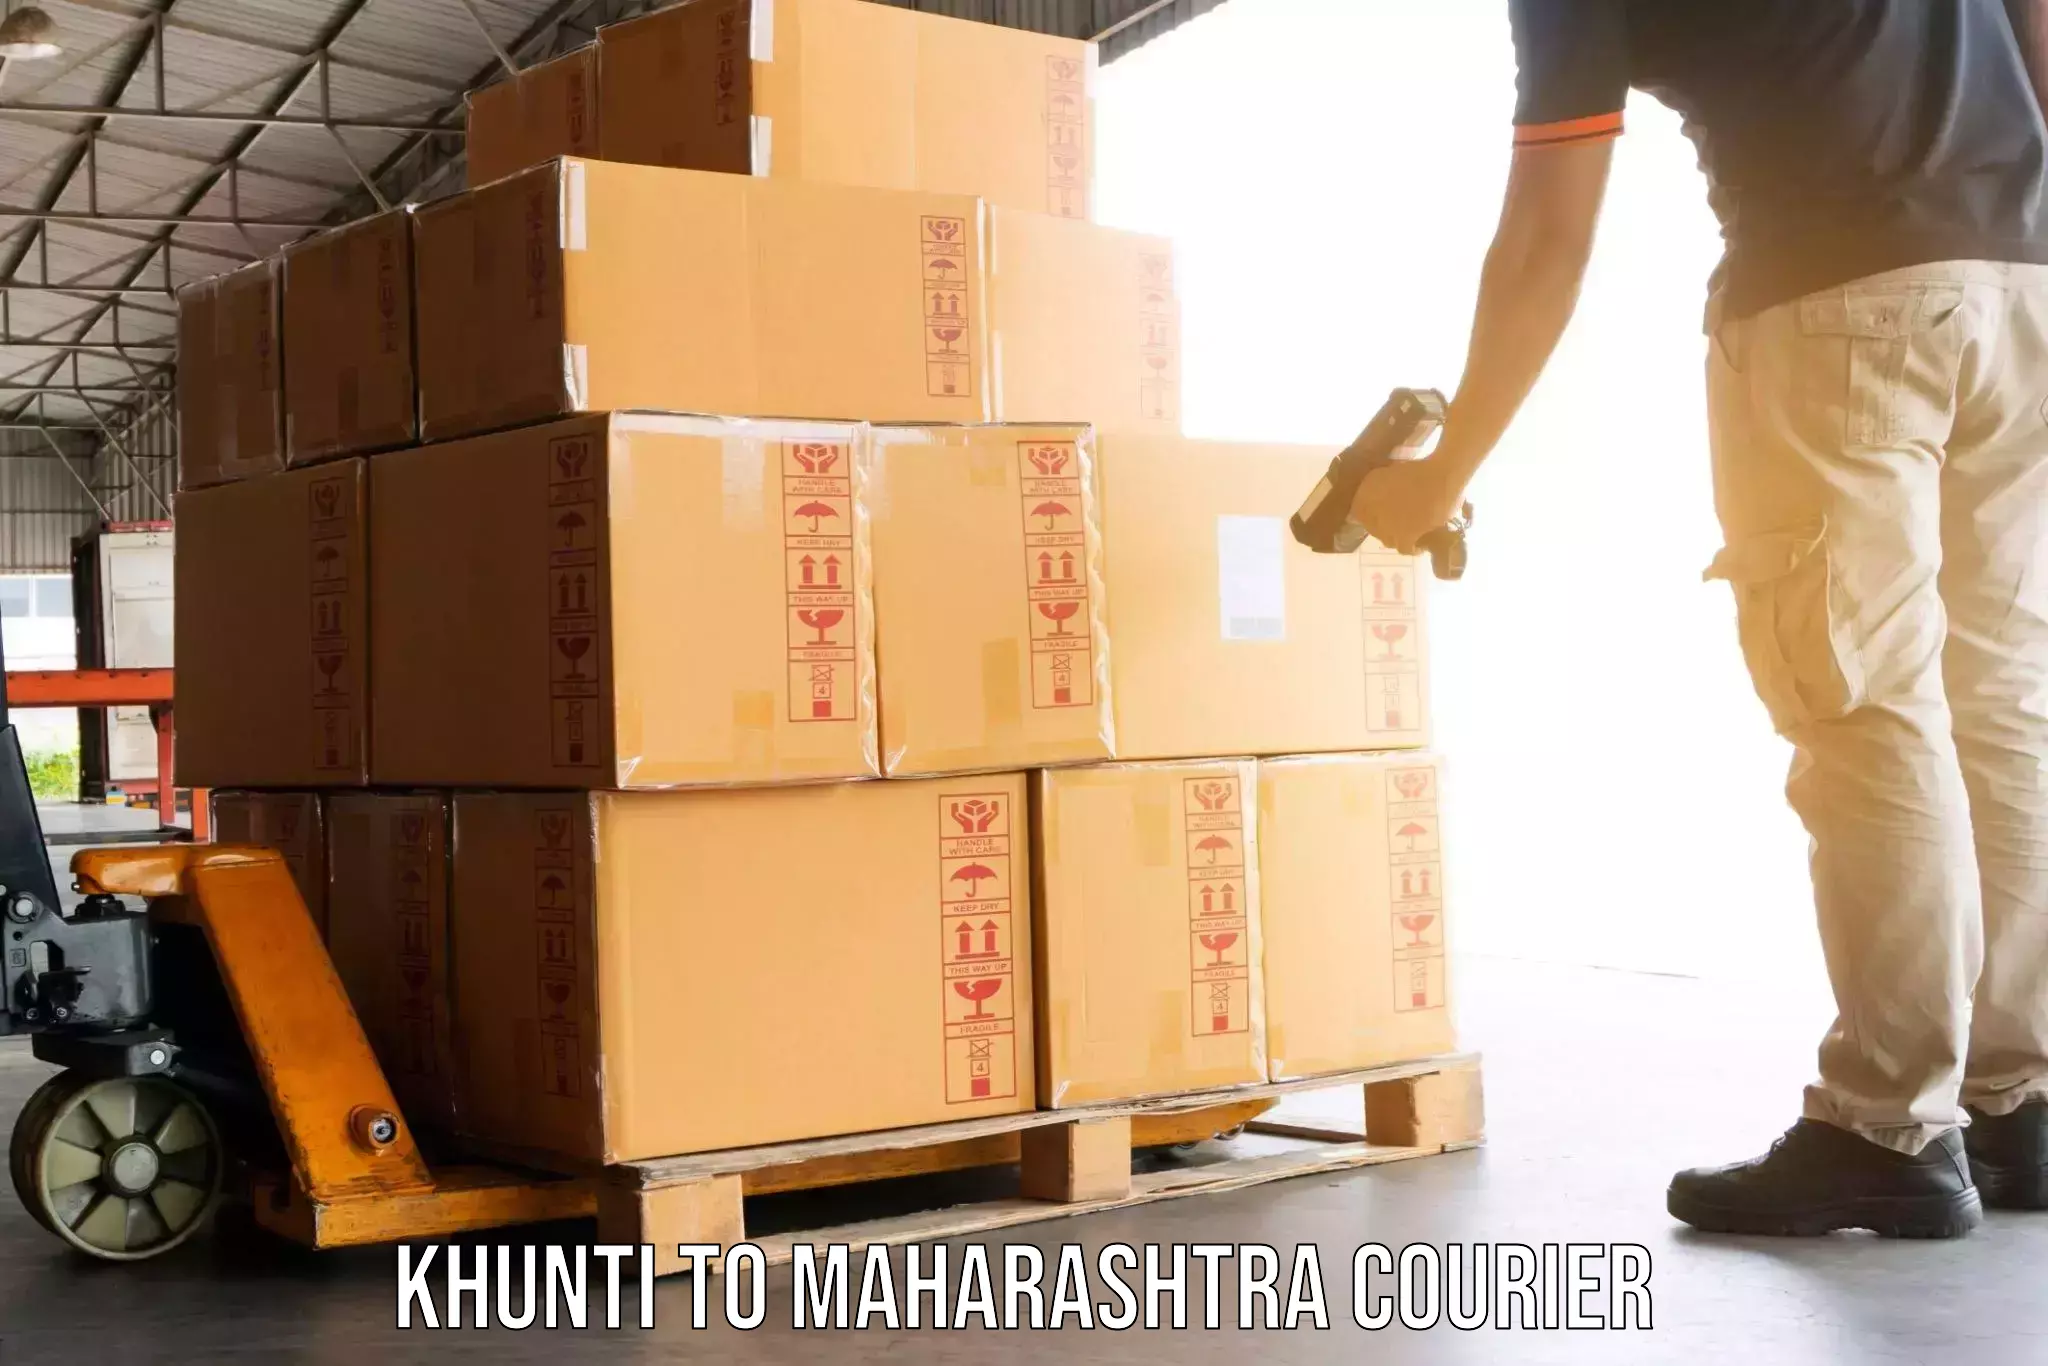 Trusted relocation experts Khunti to Maharashtra